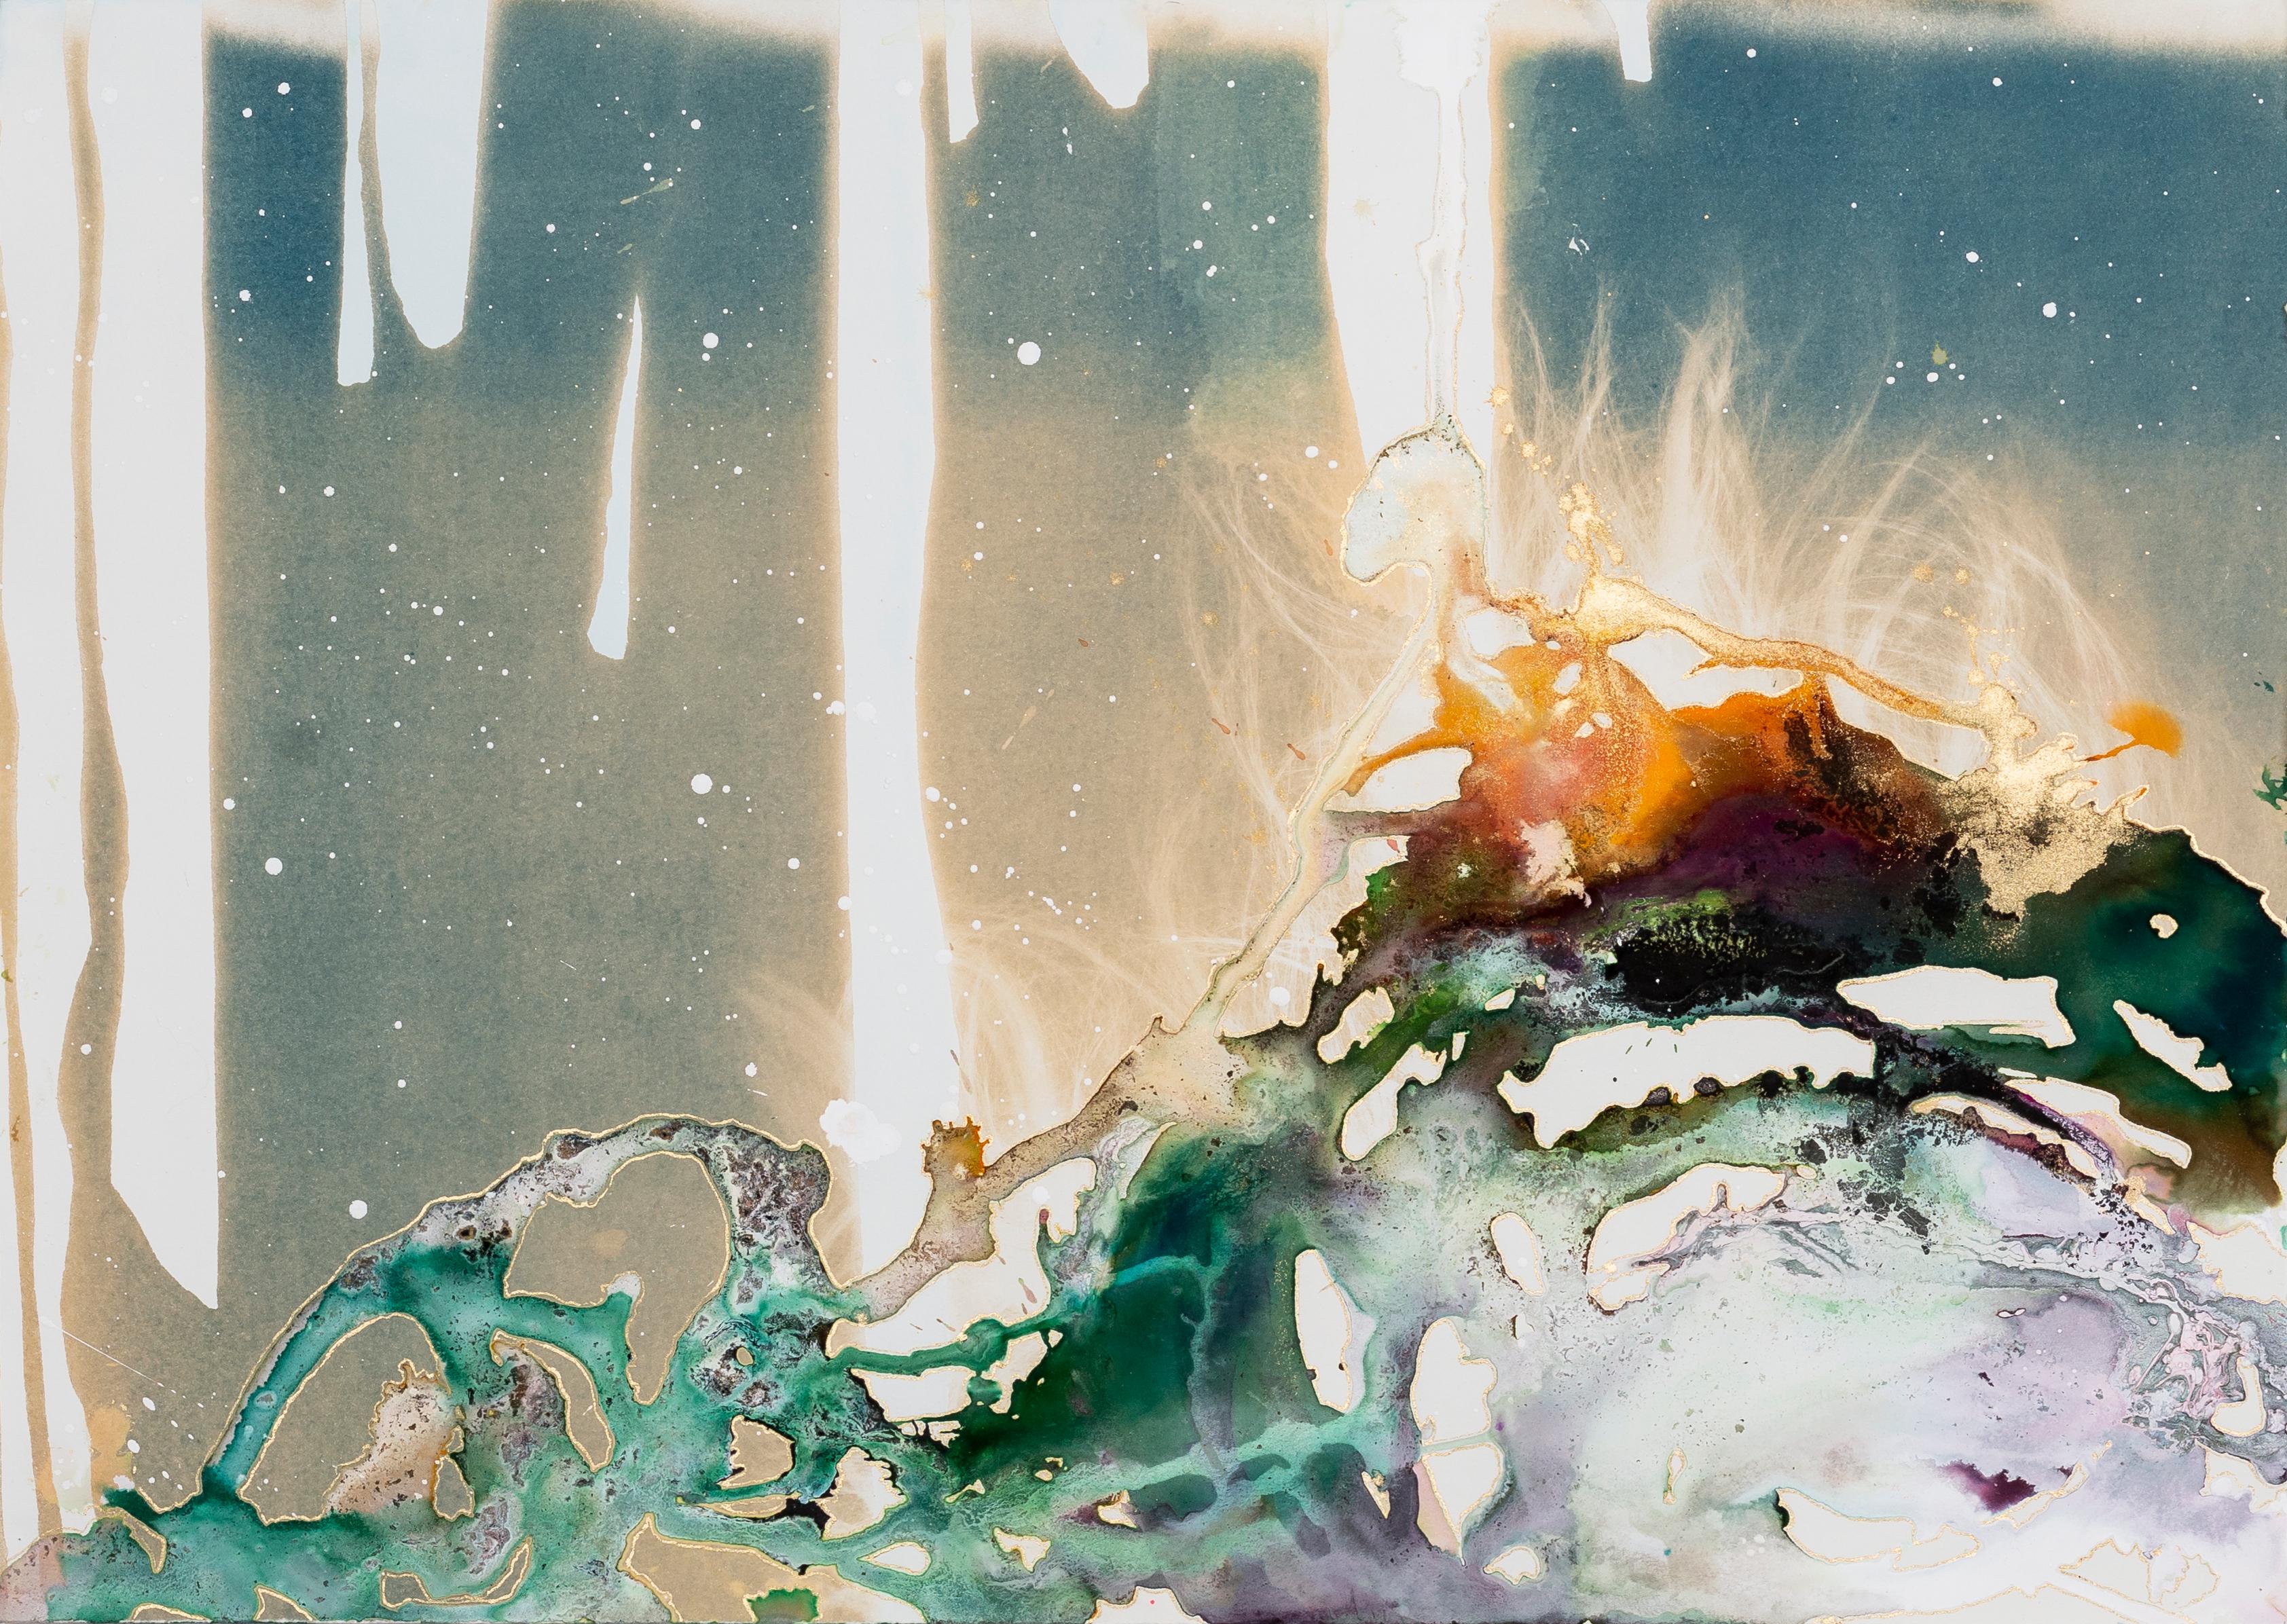 Caroline Bullock Abstract Drawing - 'Corona 2' - Nature-based Abstract - Mixed Media - Cyanotype - Kapoor